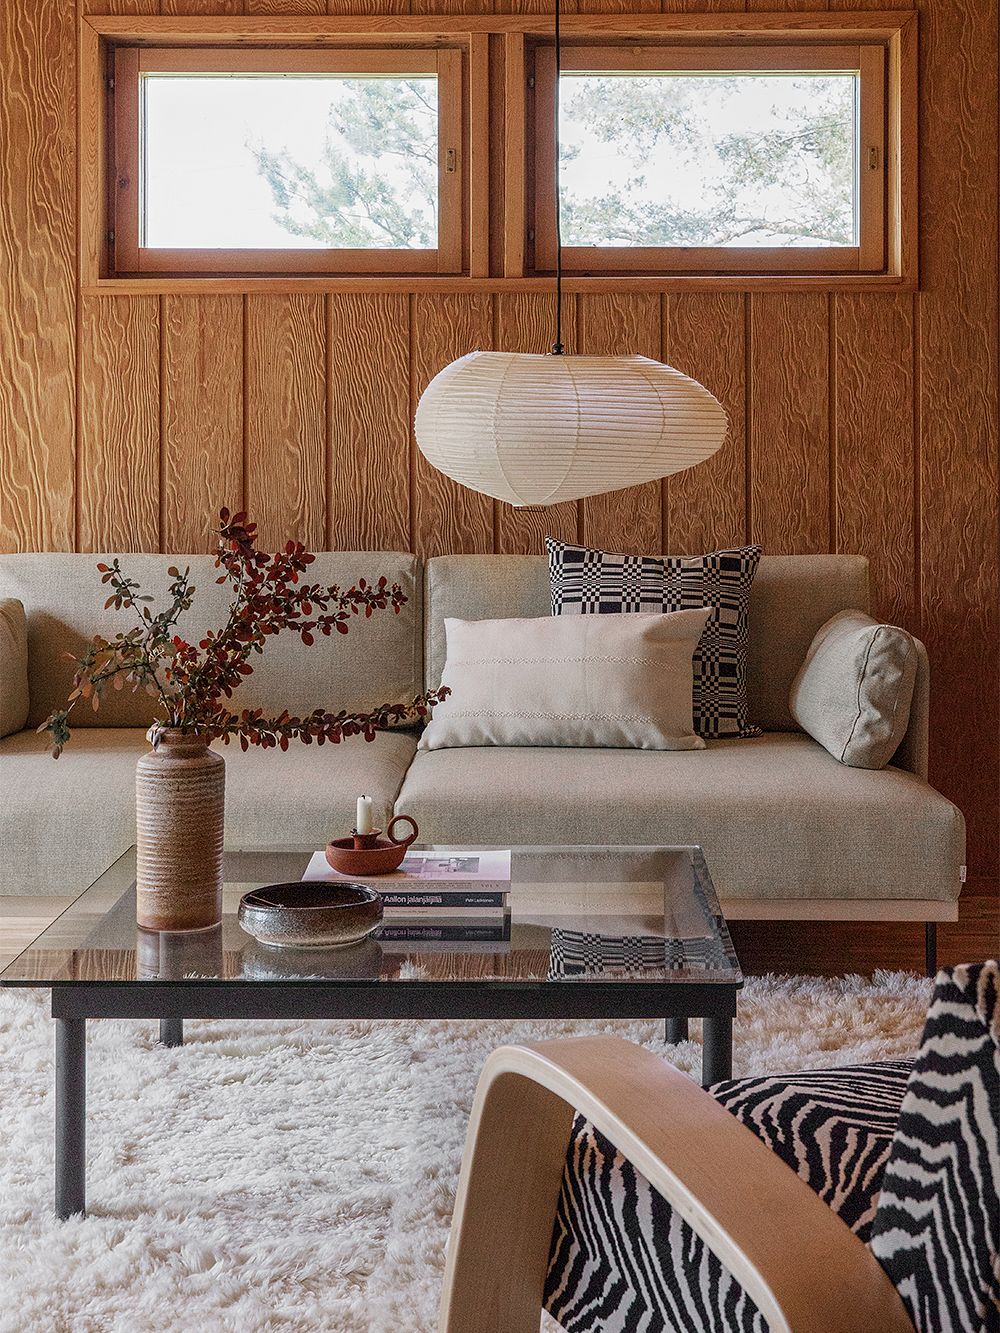 An image of Finnish Design Shop's interior design services reference location, Villa Ekkulla: the living room decor.